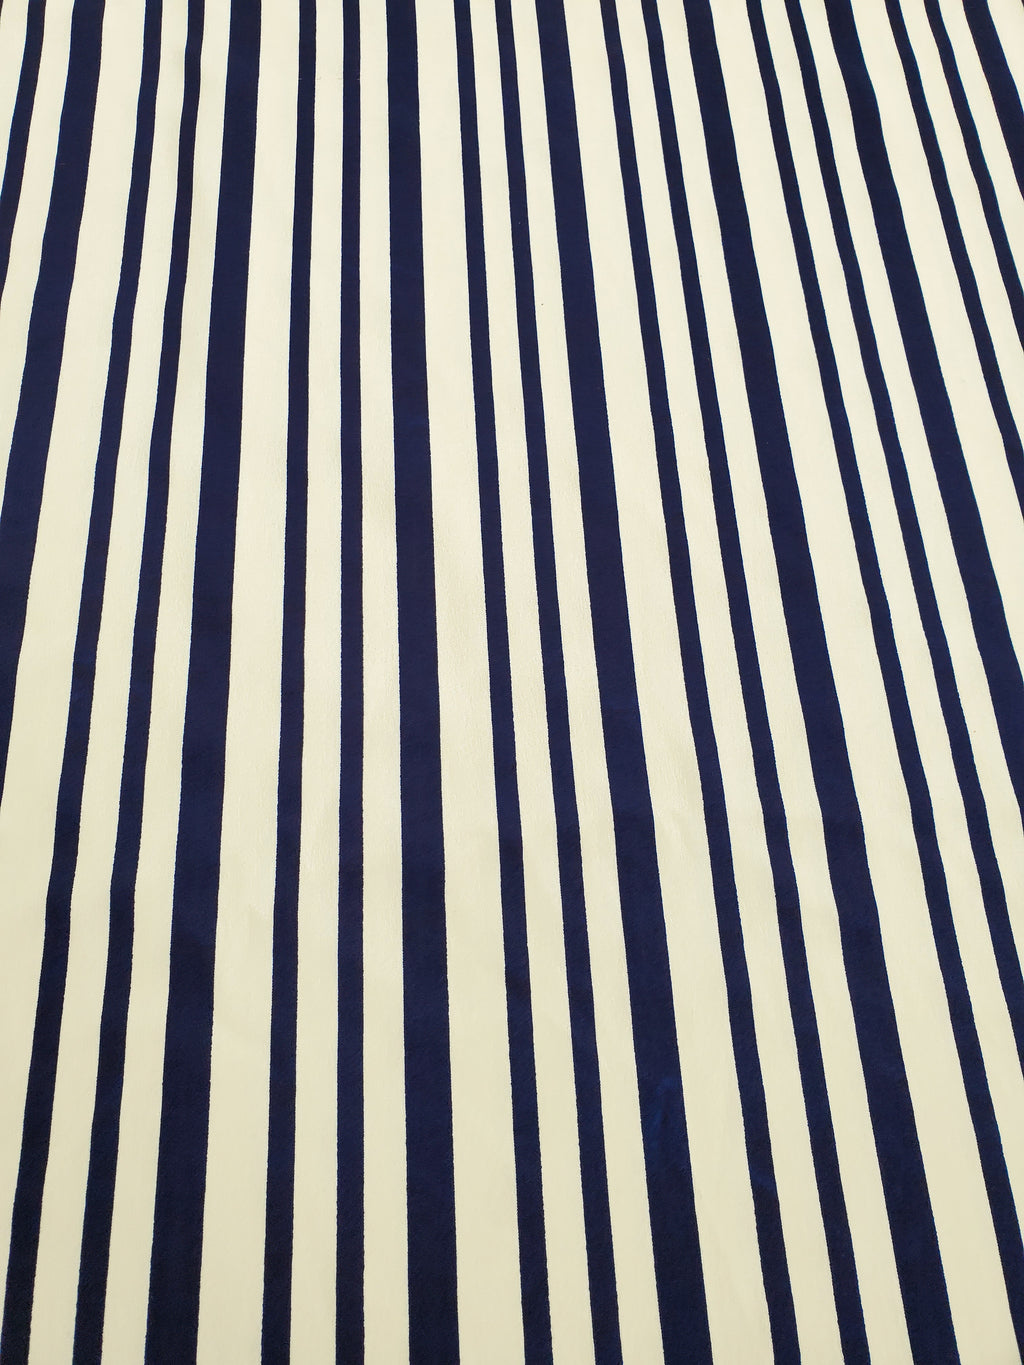 Stripes Navy/Cream